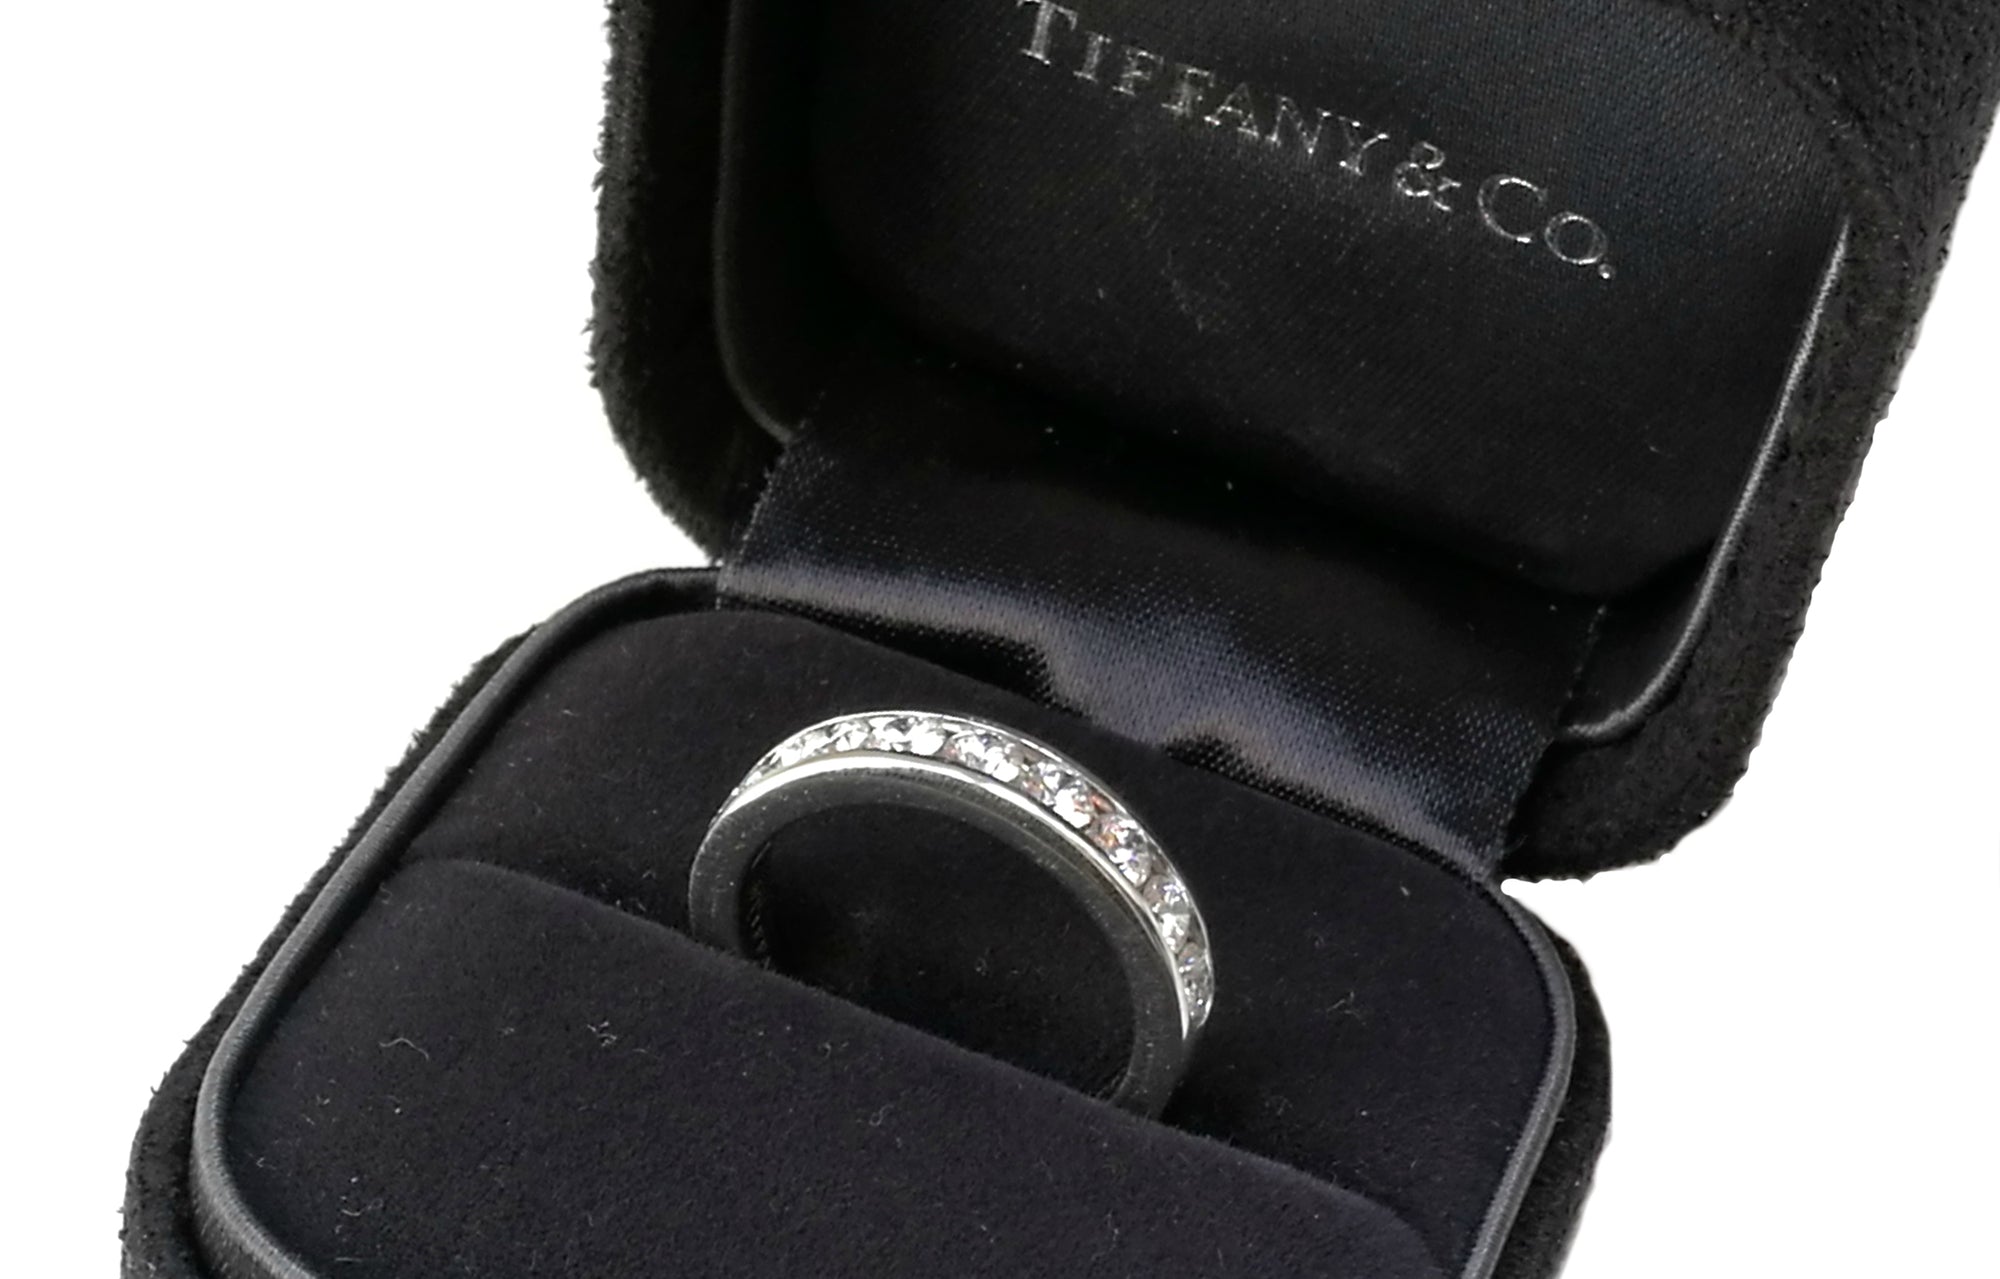 Tiffany & Co. 3.9mm Channel Set Diamond & Platinum Wedding / Eternity Band